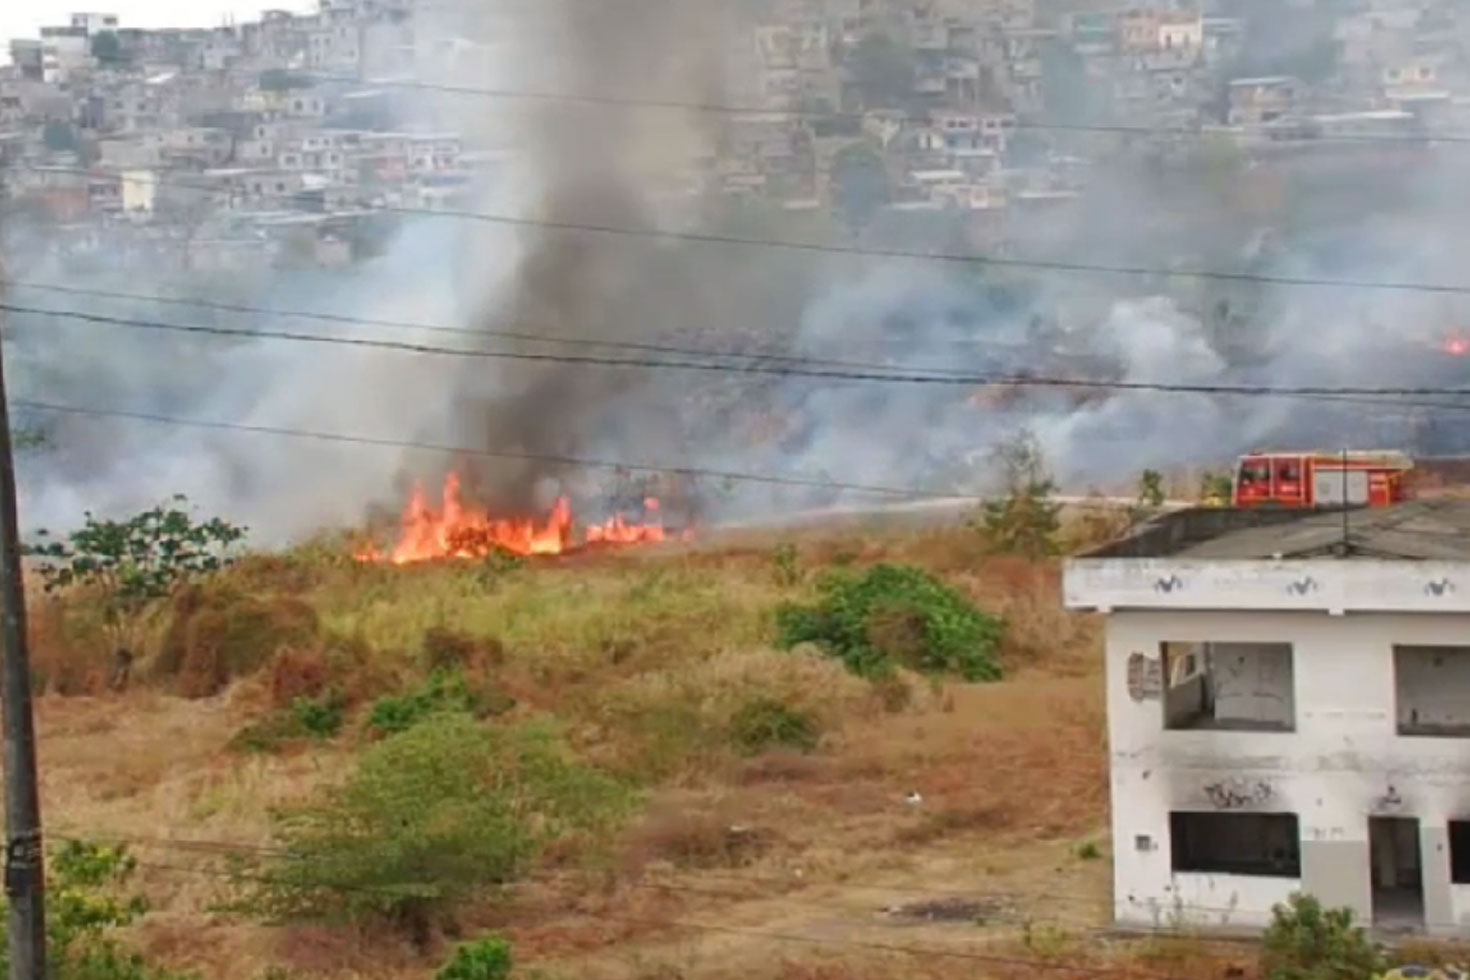  Se reporta la quema de maleza en la Av. Juan Tanca Marengo 